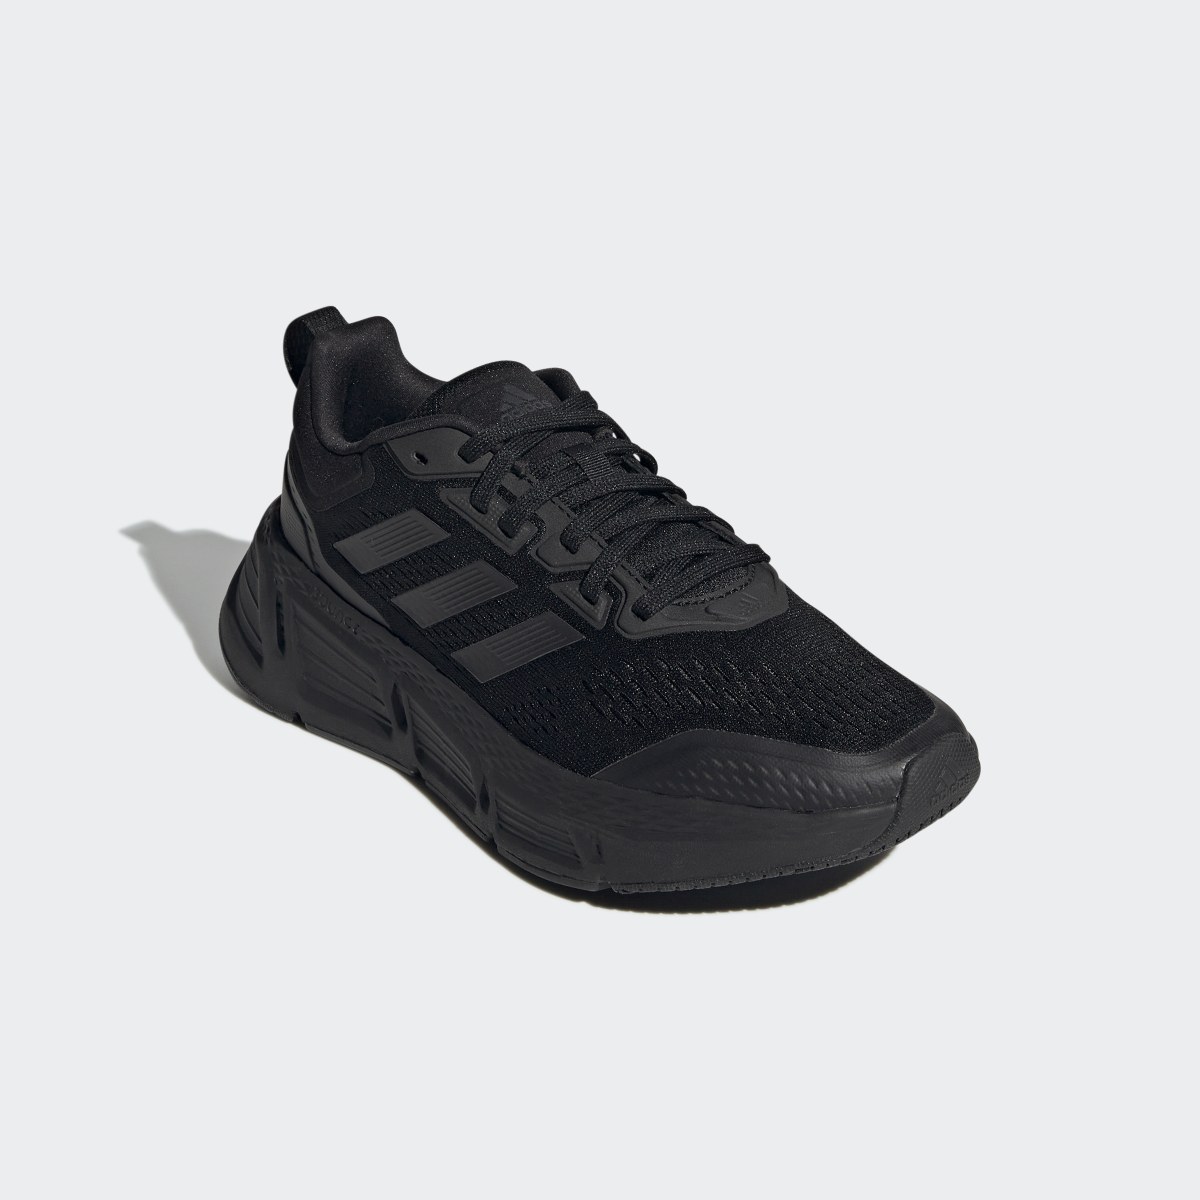 Adidas Questar Shoes. 5